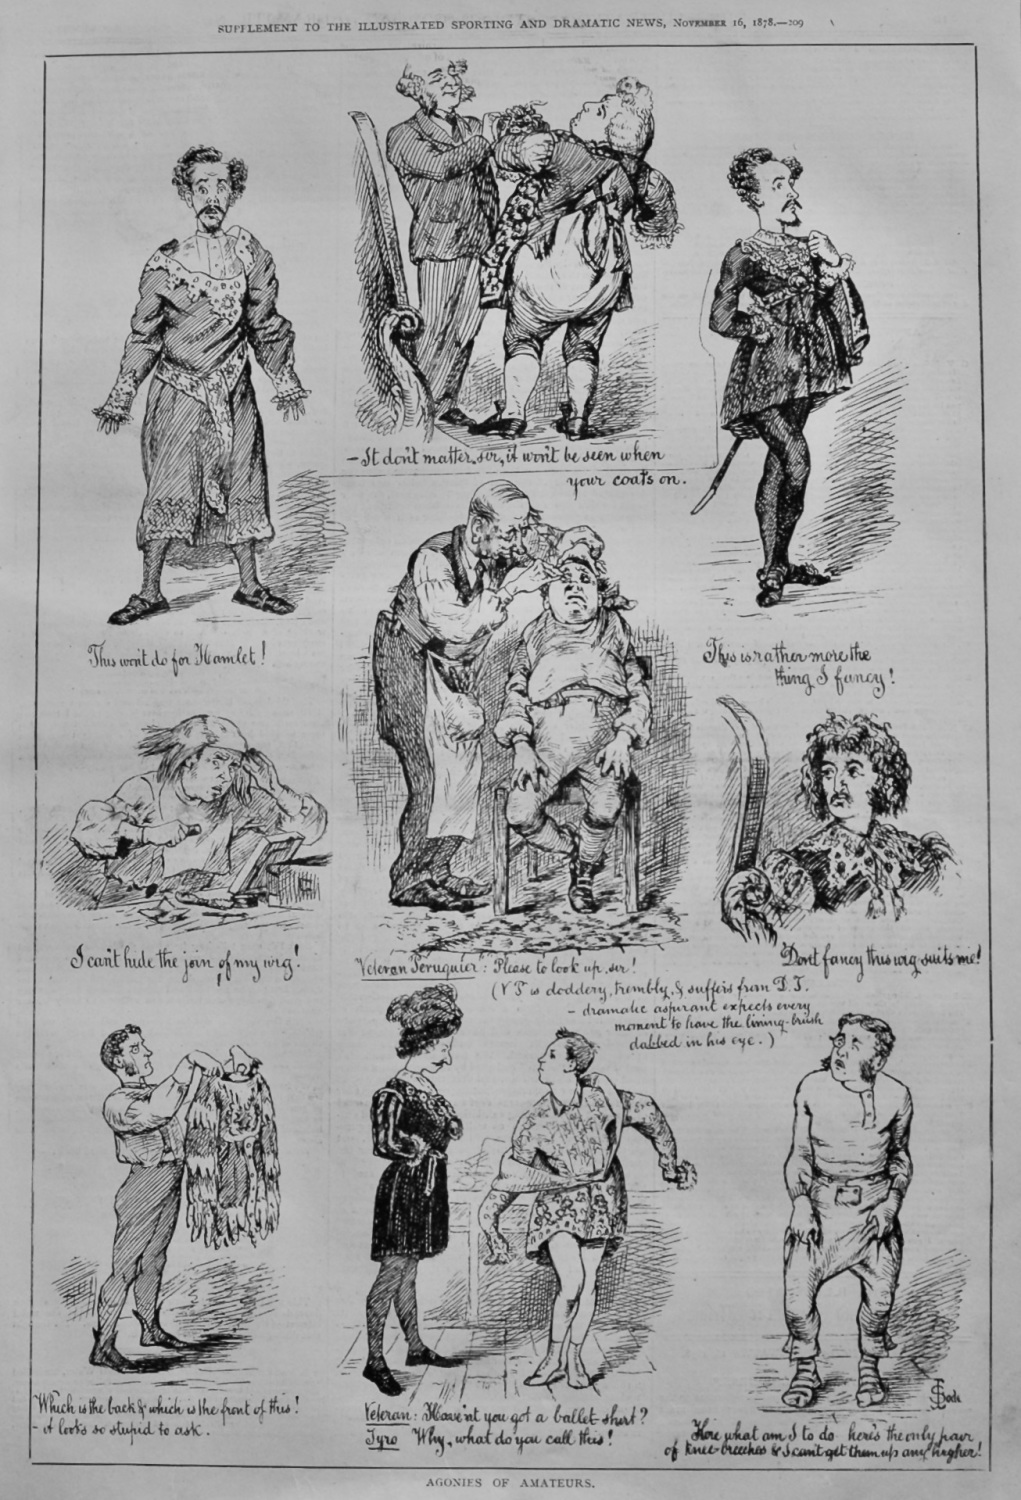 Agonies of Amateurs.  1878.